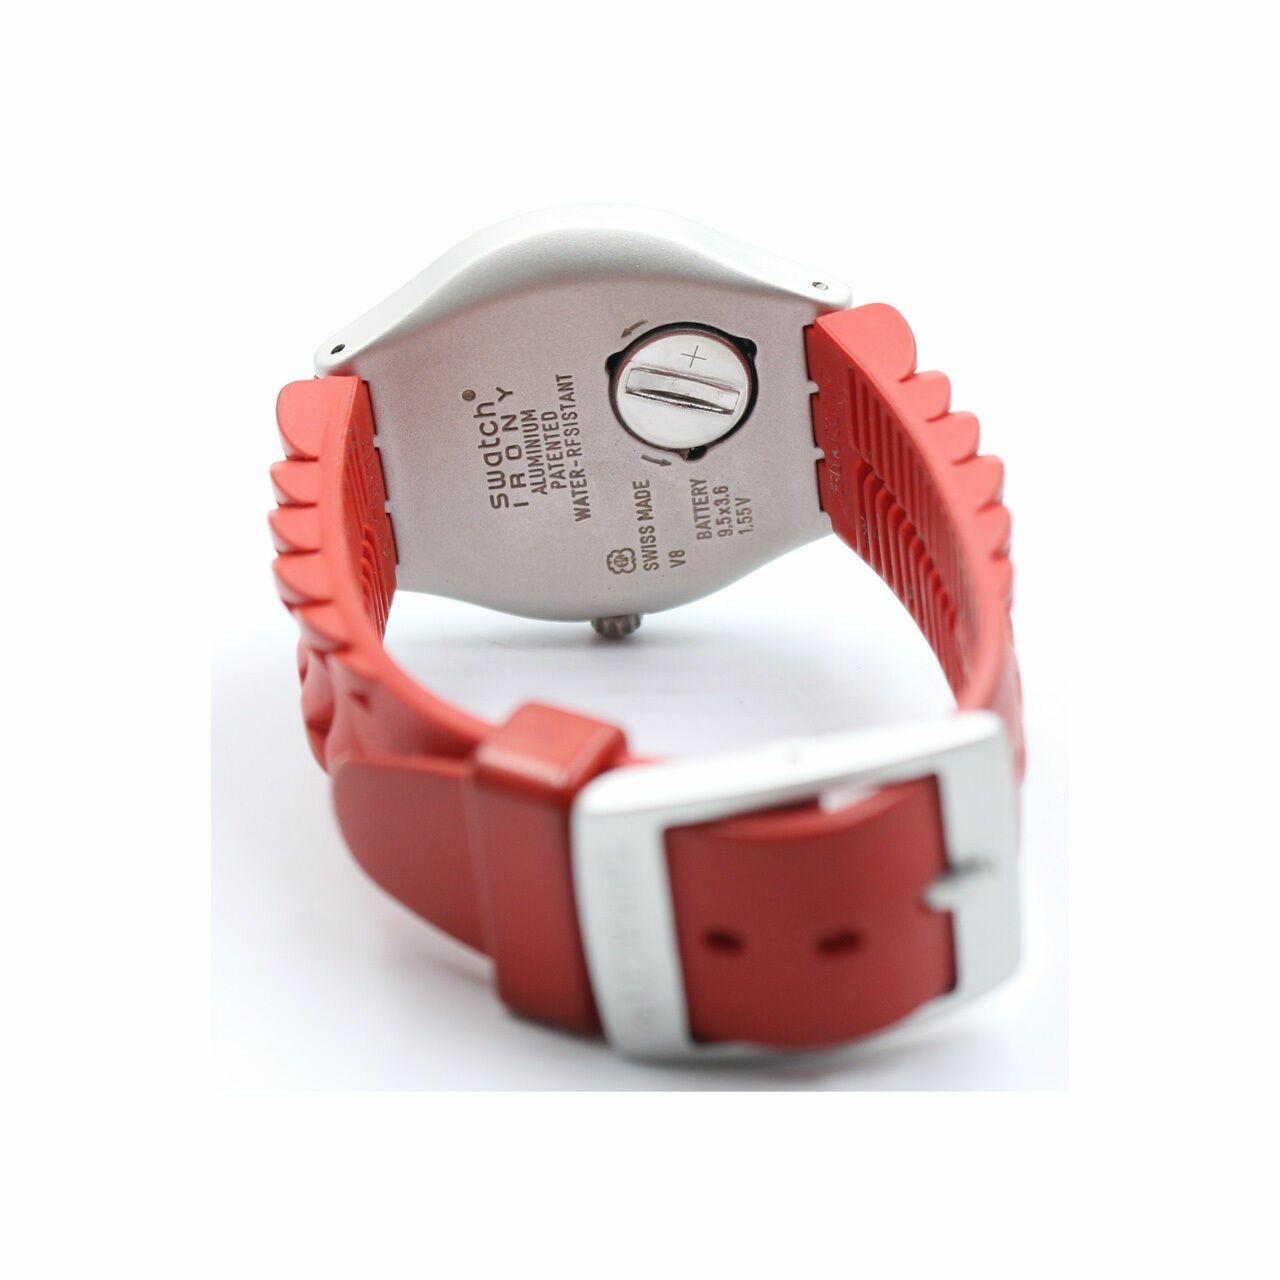 Swatch Red & Black Wristwatch